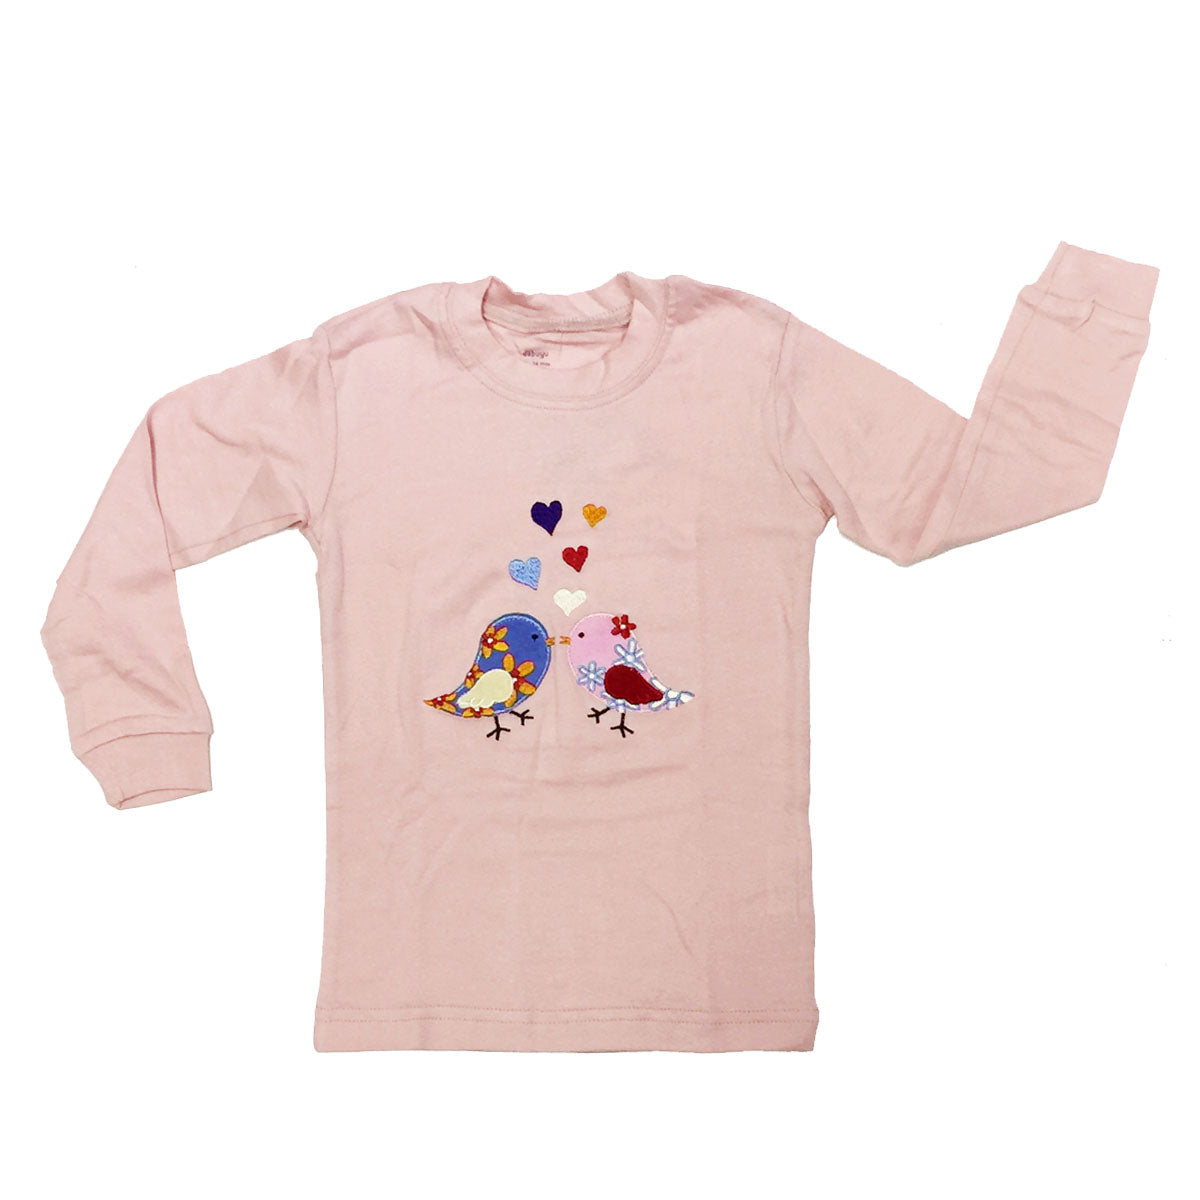 Dabuyu Love Birds Children's Pajamas